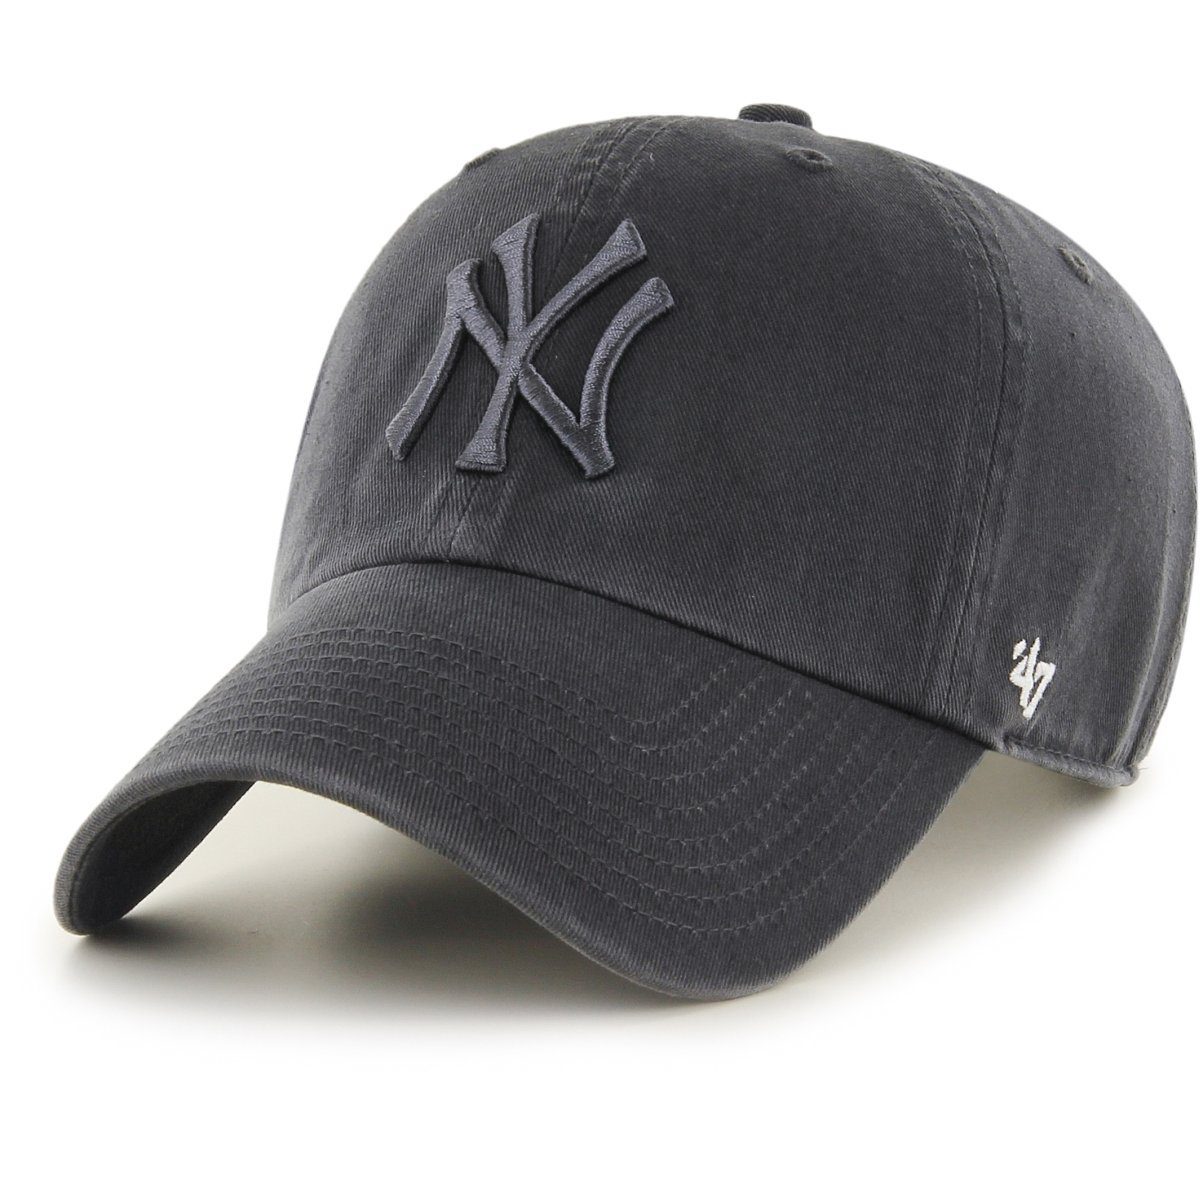 x27;47 Brand Baseball CLEAN UP Yankees NY Cap